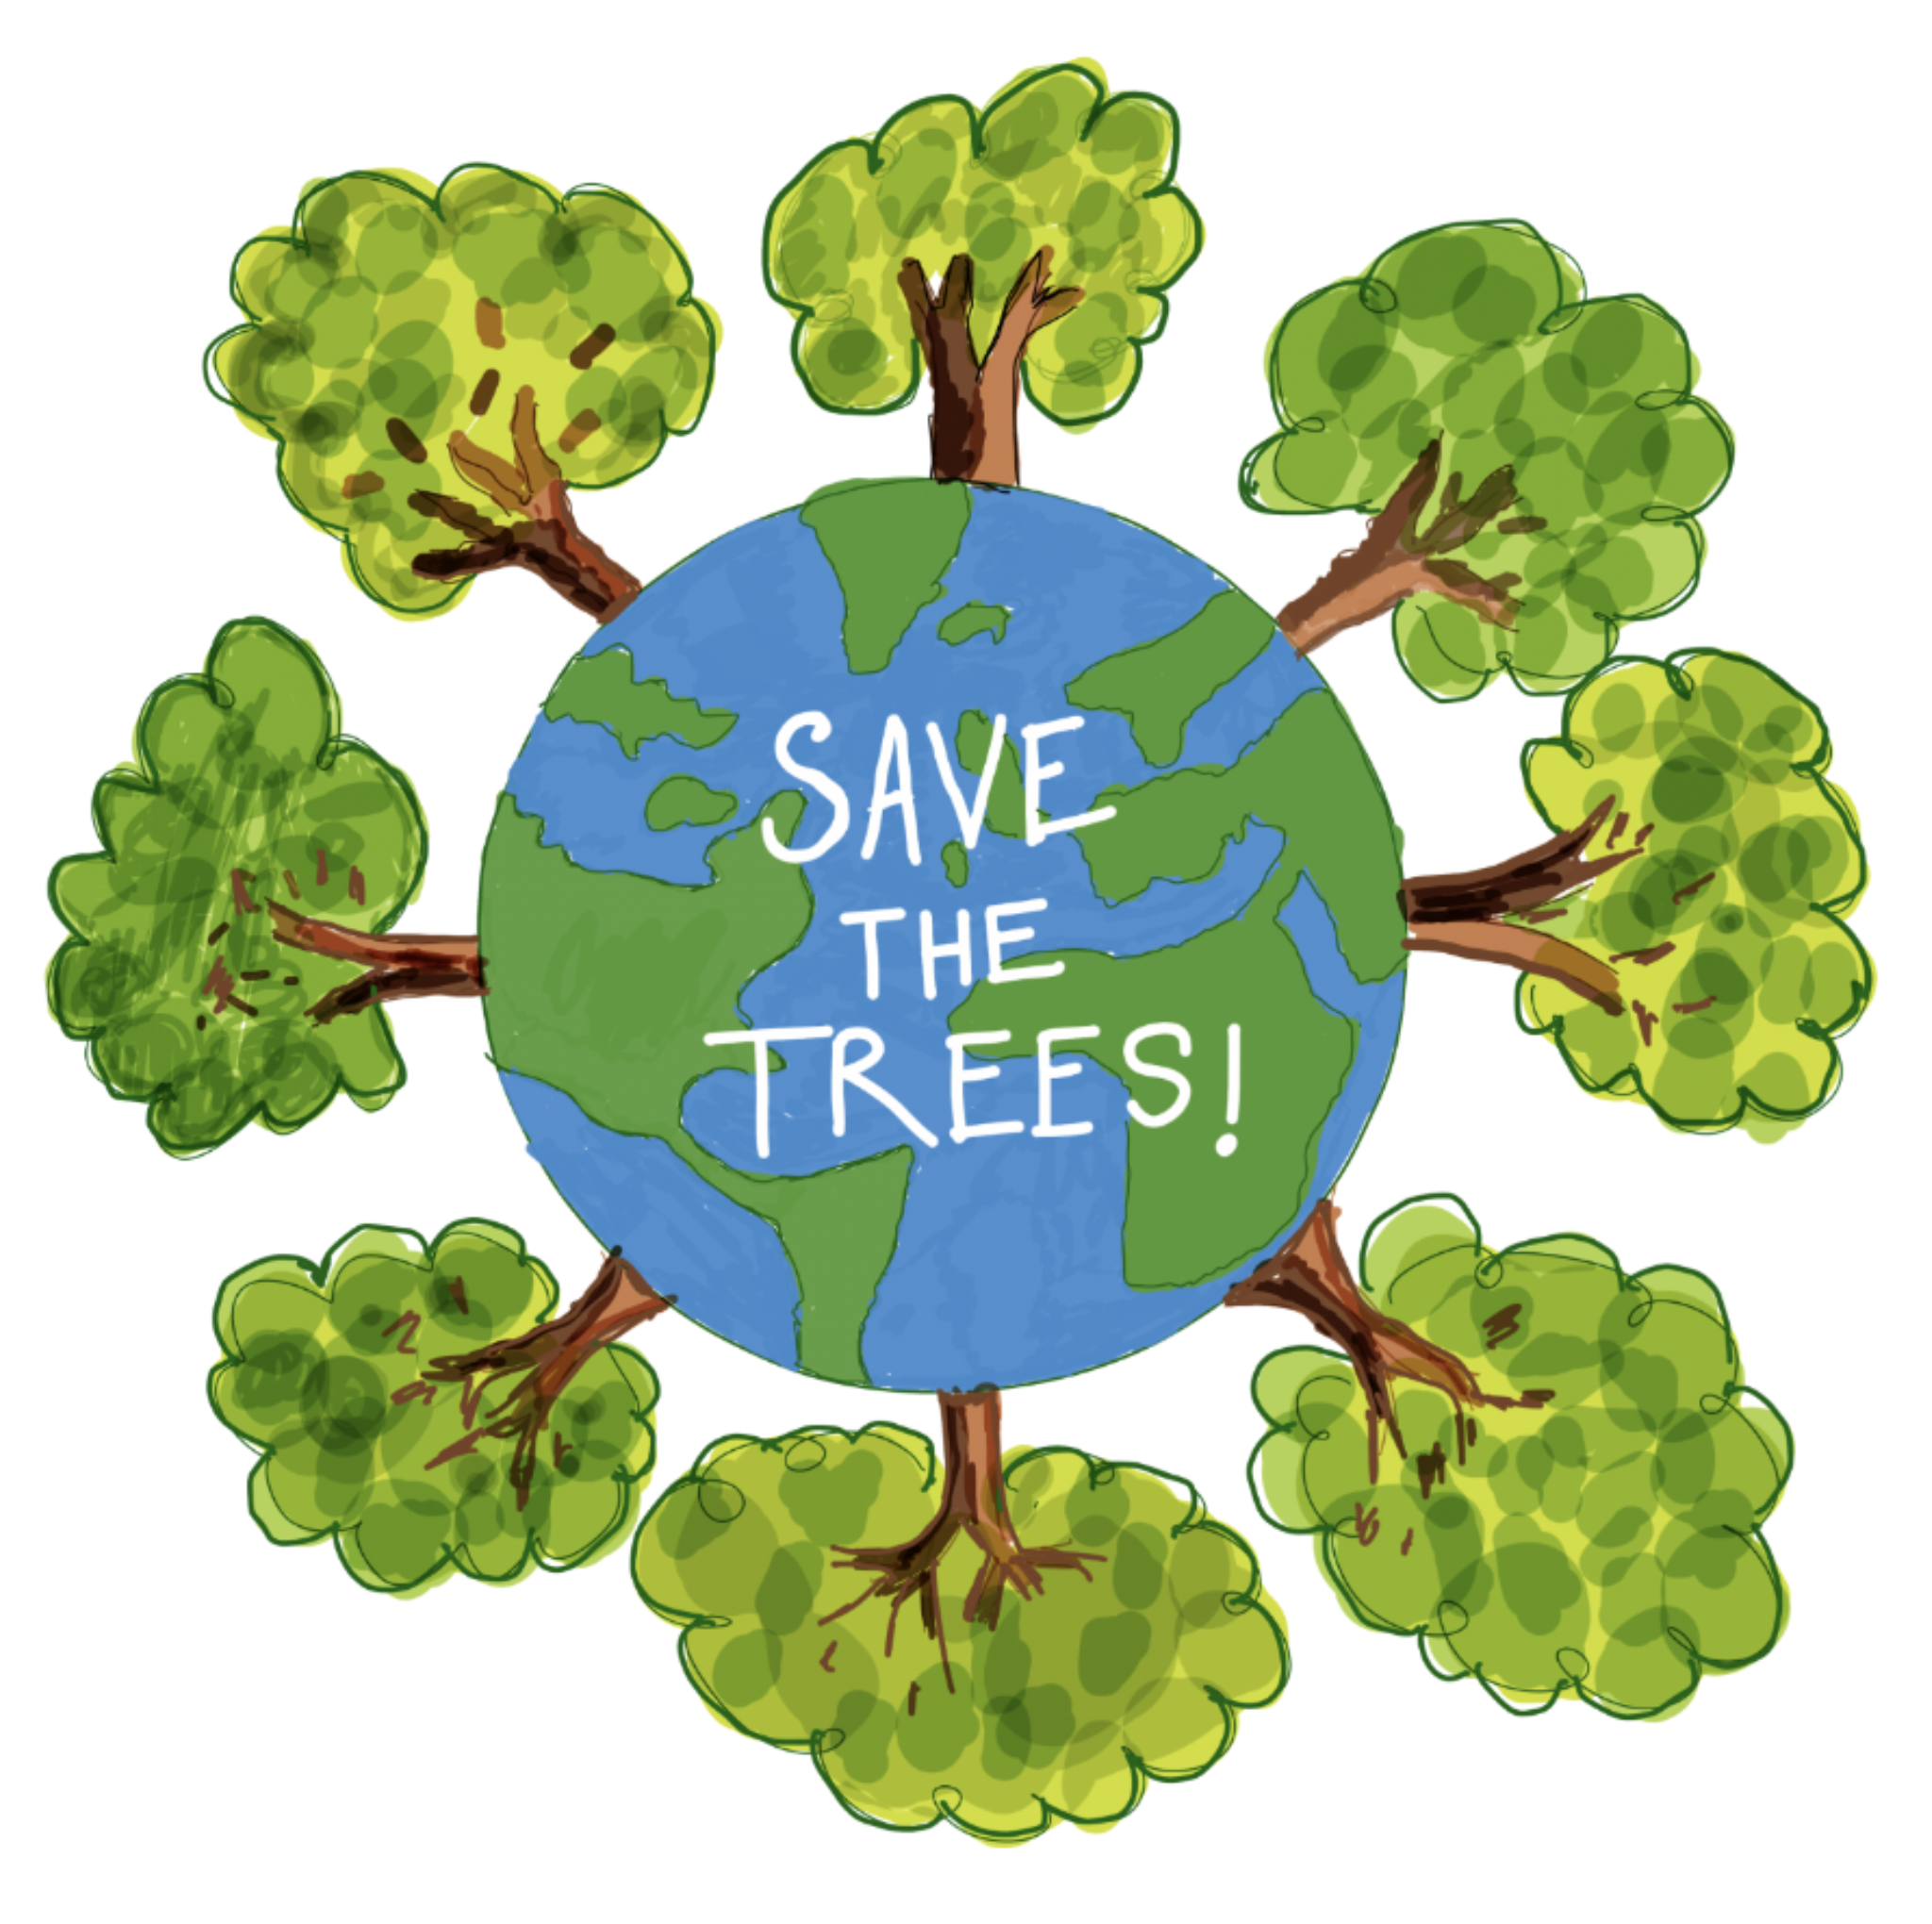 Slogan on Trees | Slogan on Save Trees | 10 Slogans on Trees in English -  YouTube